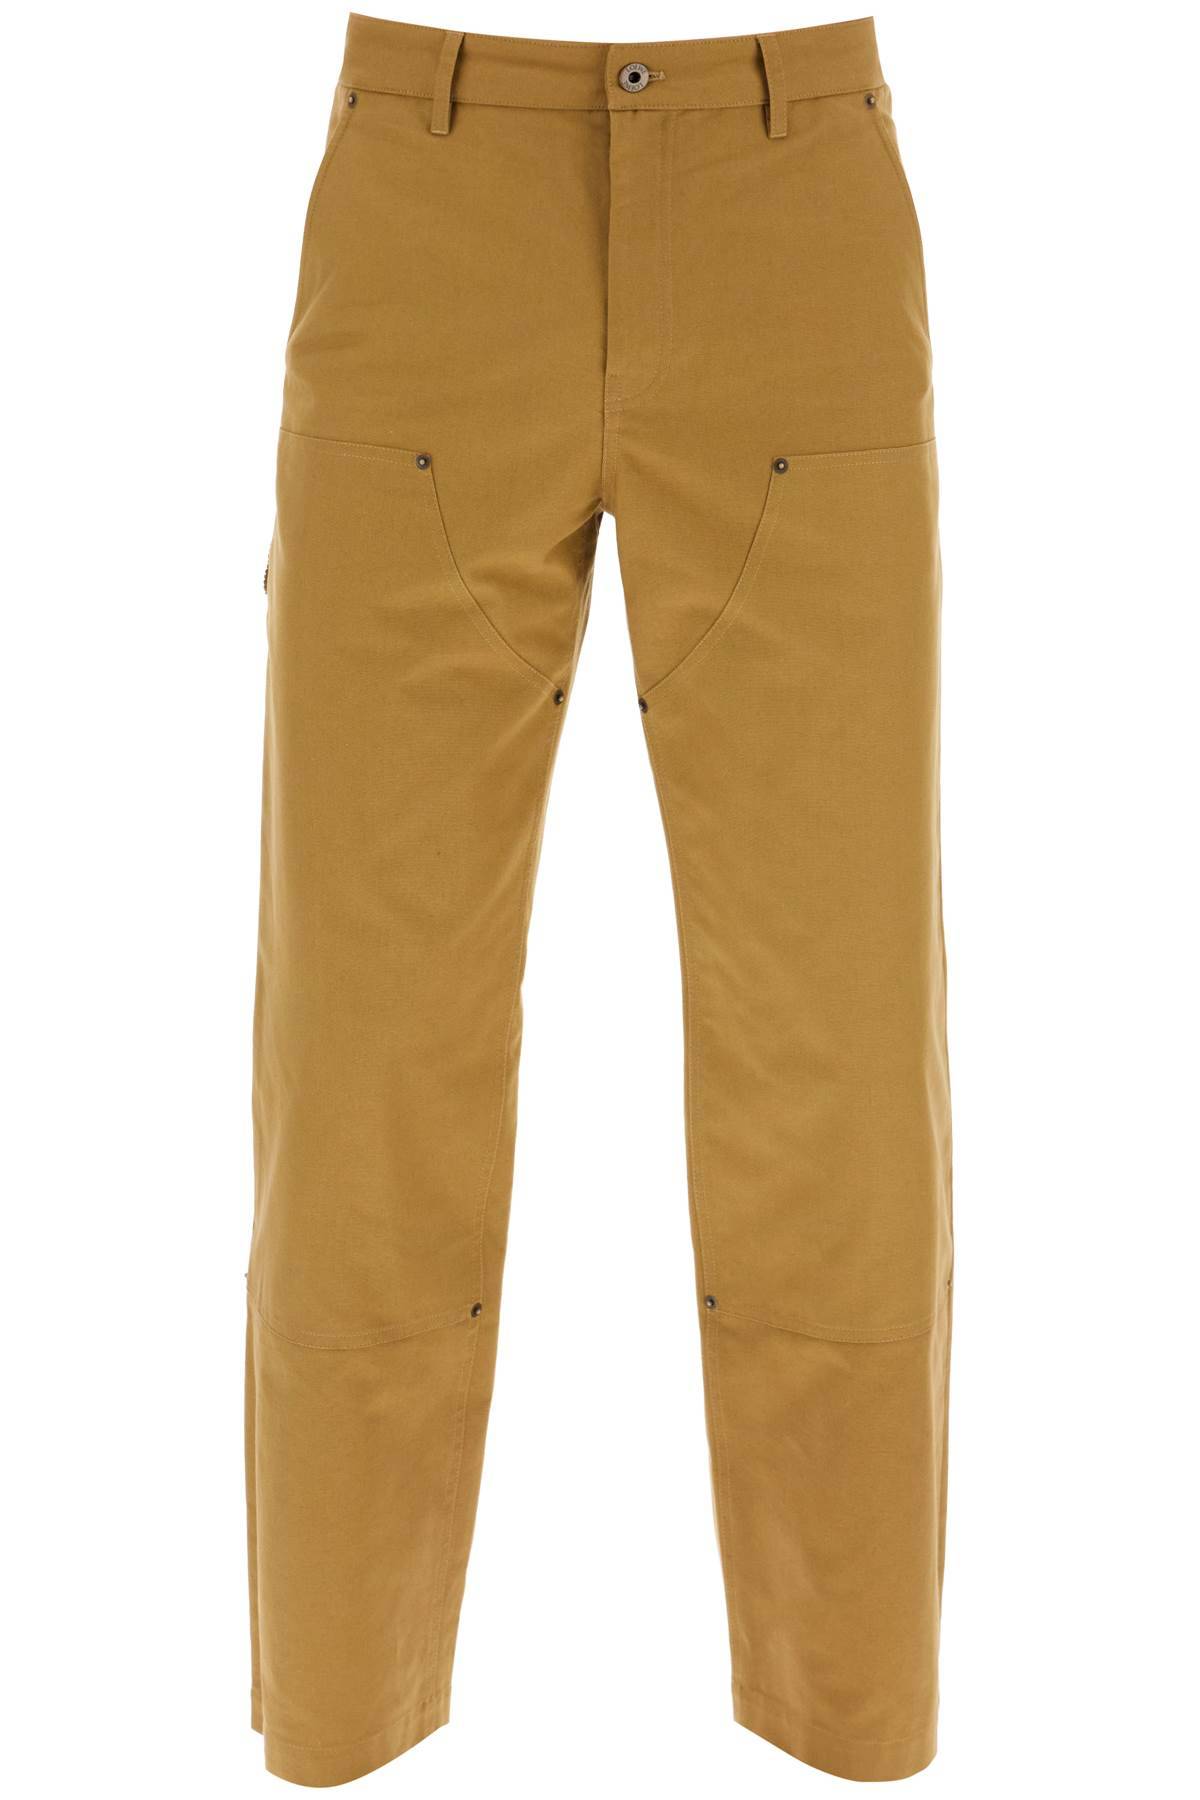 Loewe LOEWE cotton workwear pants